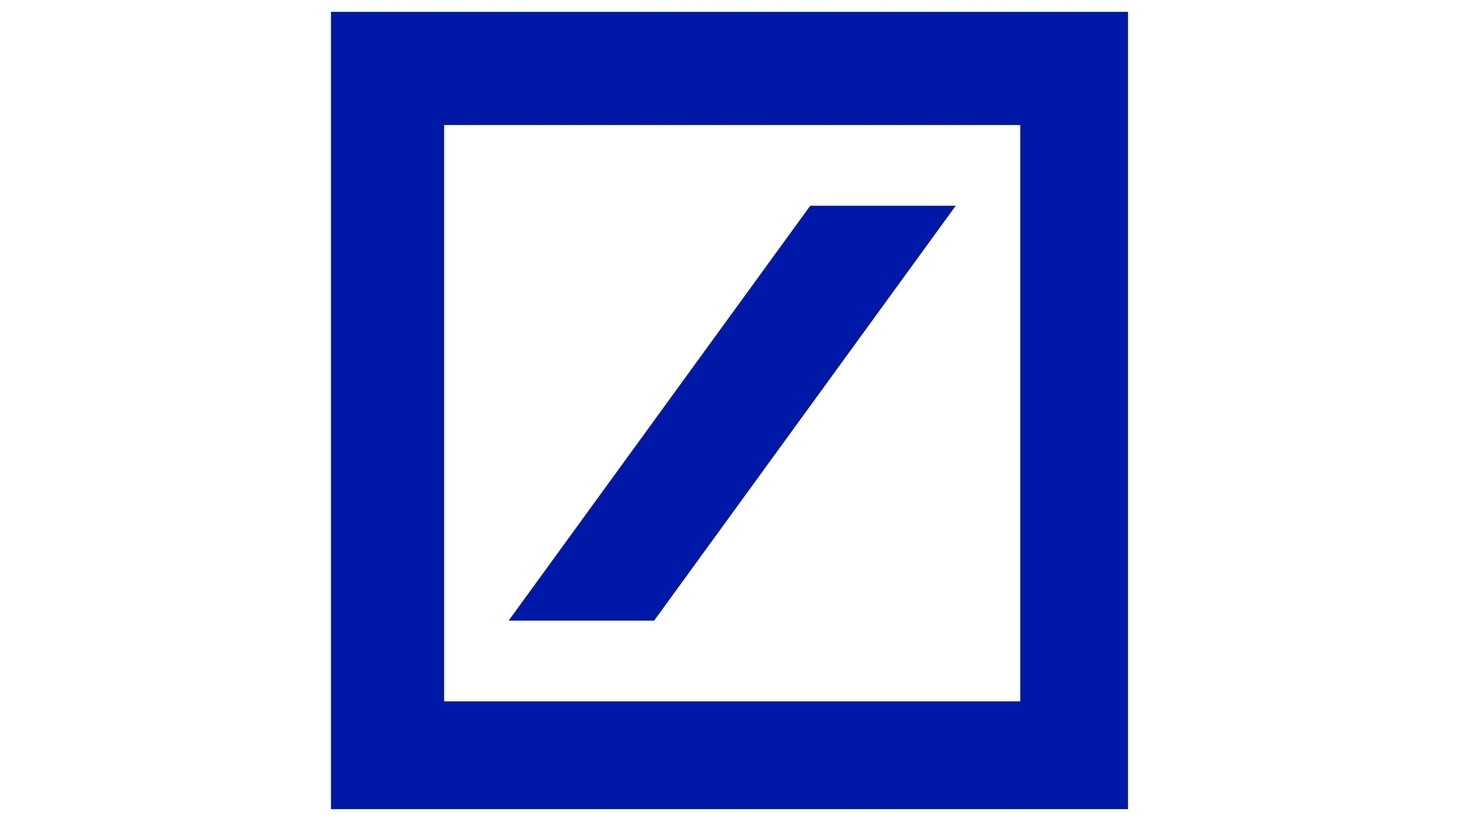 Deutsche bank sign 2010 present